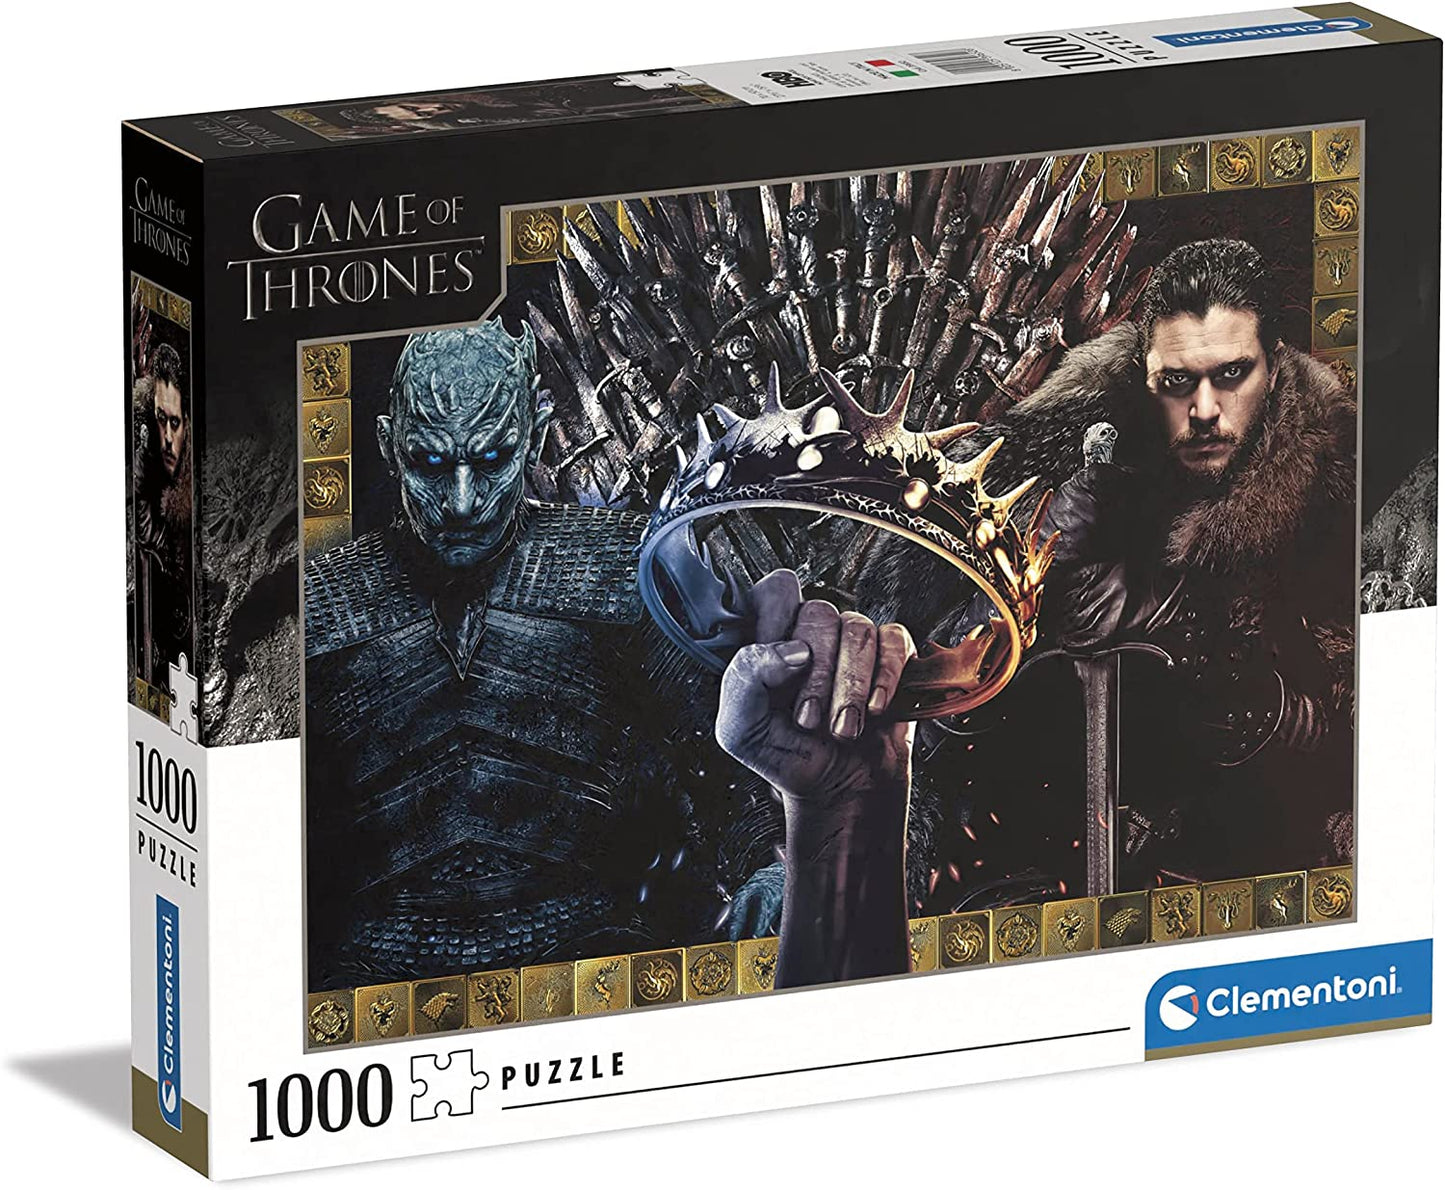 Game of Thrones, 1000 Piece Puzzle